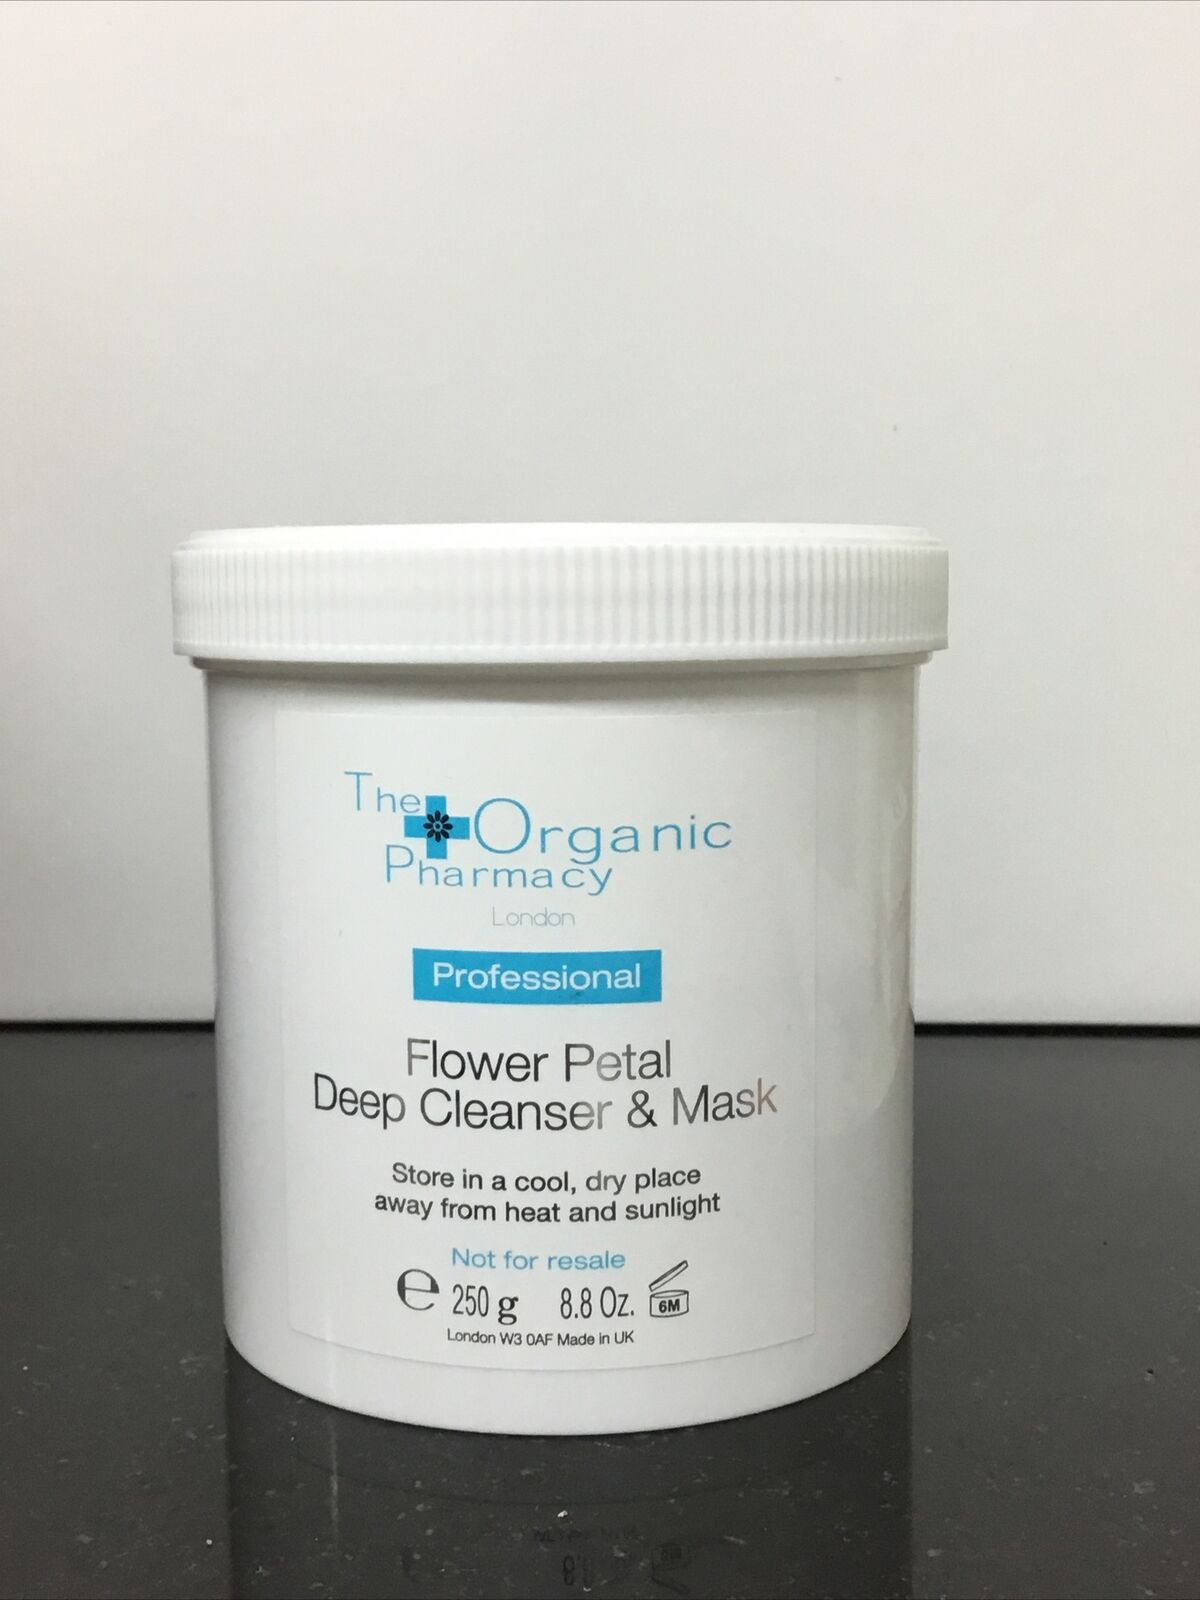 The Organic Pharmacy London Professional Flower Petal Deep Cleanser & Mask 250g